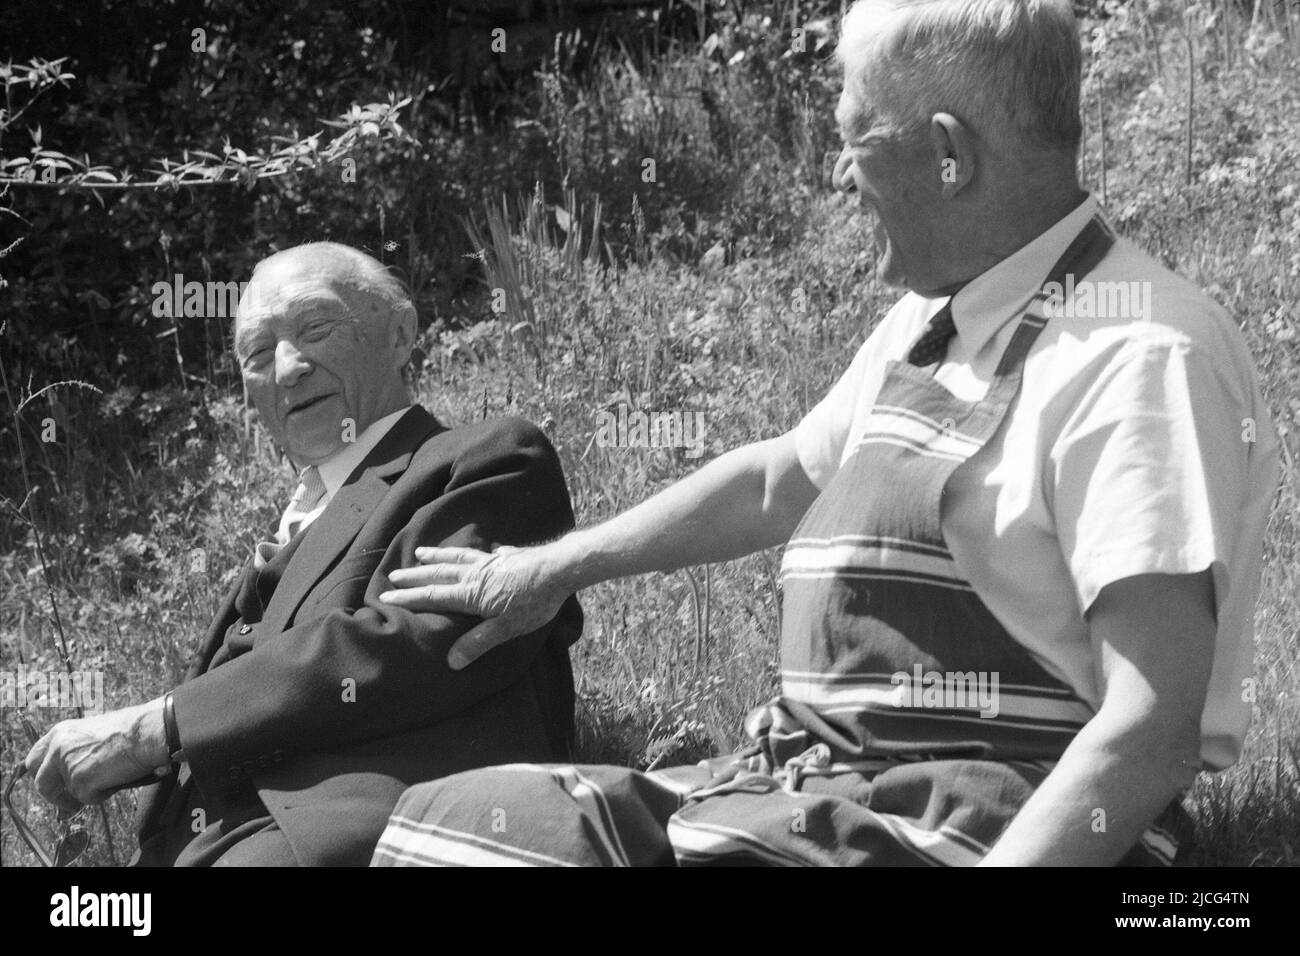 Oskar KOKOSCHKA (right), Austria, painter, sits with former Federal Chancellor Konrad ADENAUER, CDU, in a meadow, friendly gesture, April 15, 1966 Stock Photo